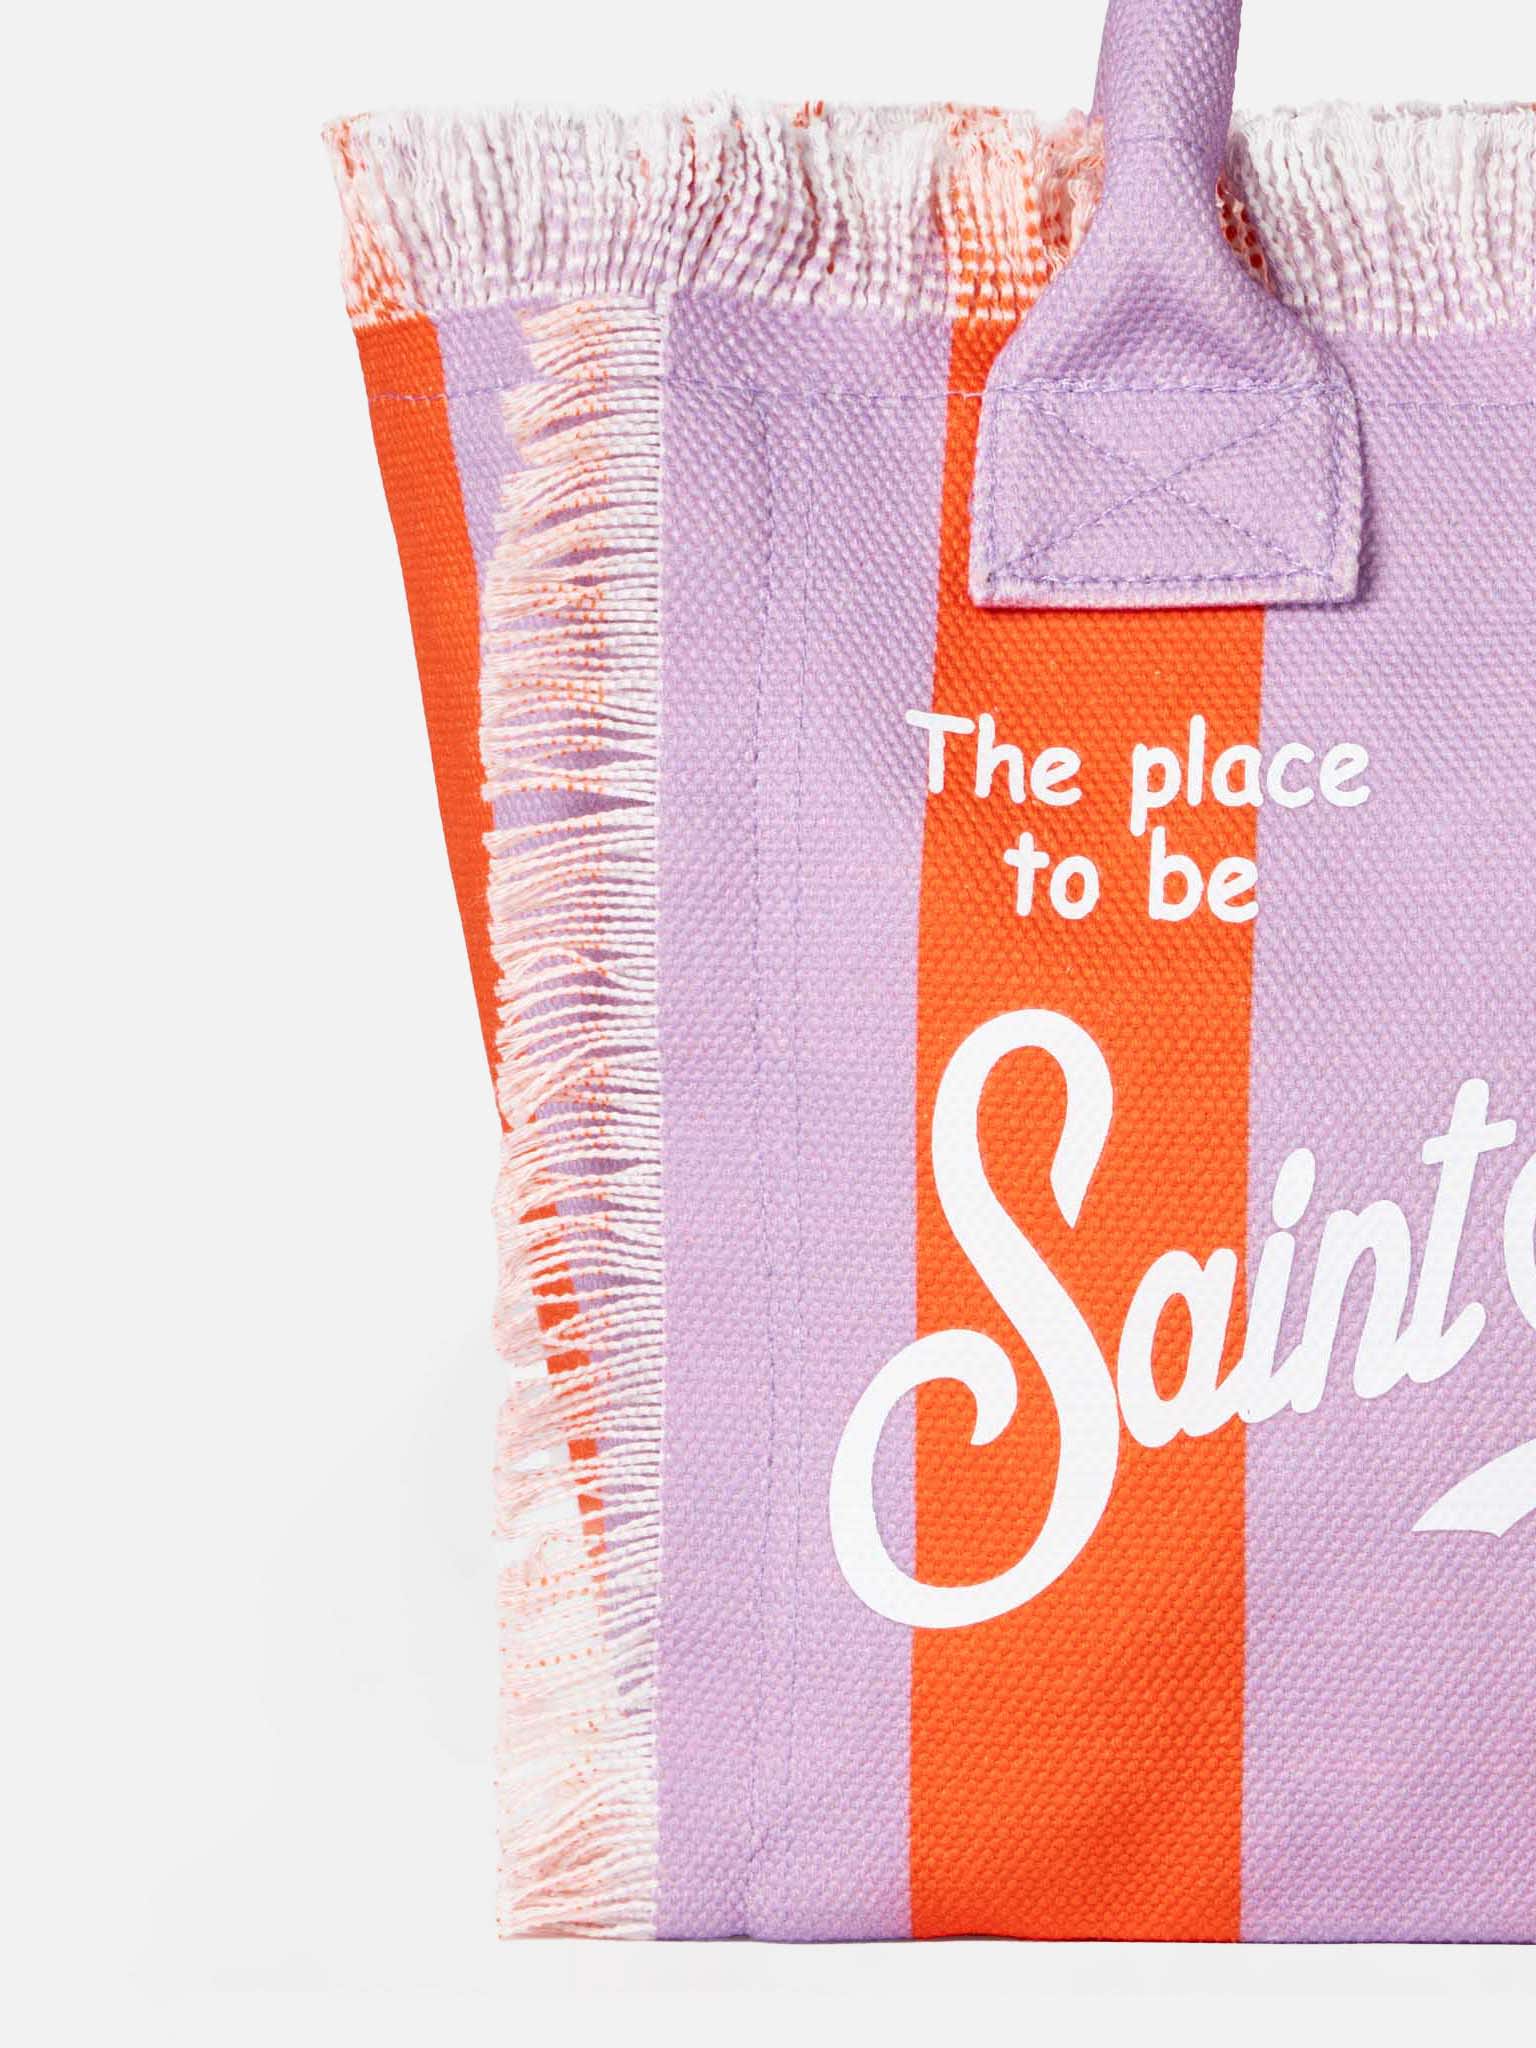 Shop Mc2 Saint Barth Colette Cotton Canvas Handbag With Lilac And Red Stripes In Orange